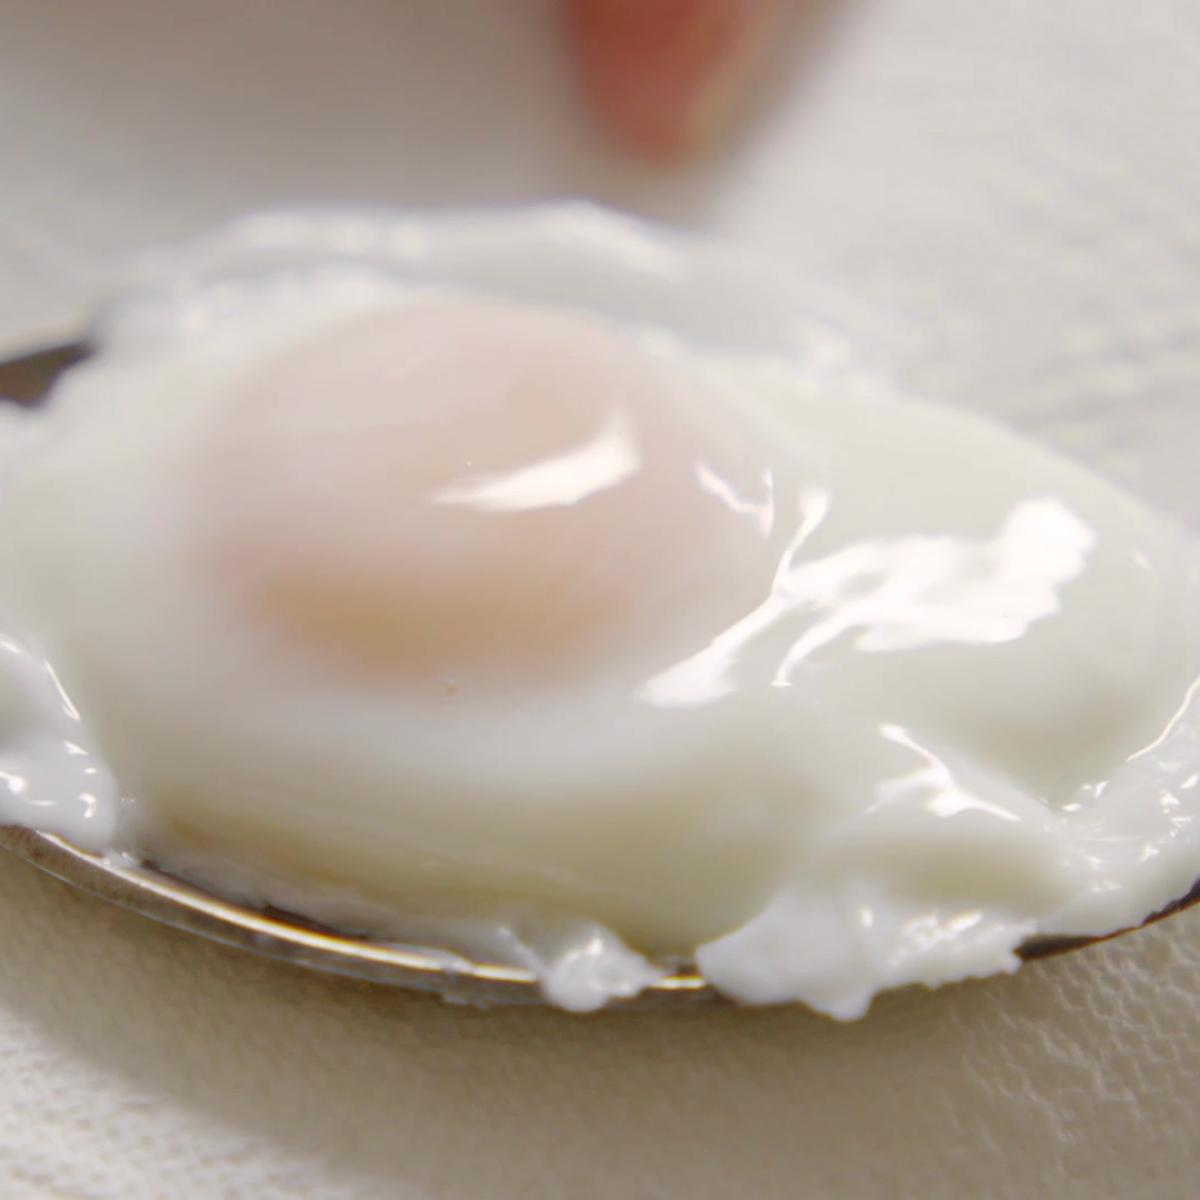 Soft-boiled Eggs | Recipes | Delia Online